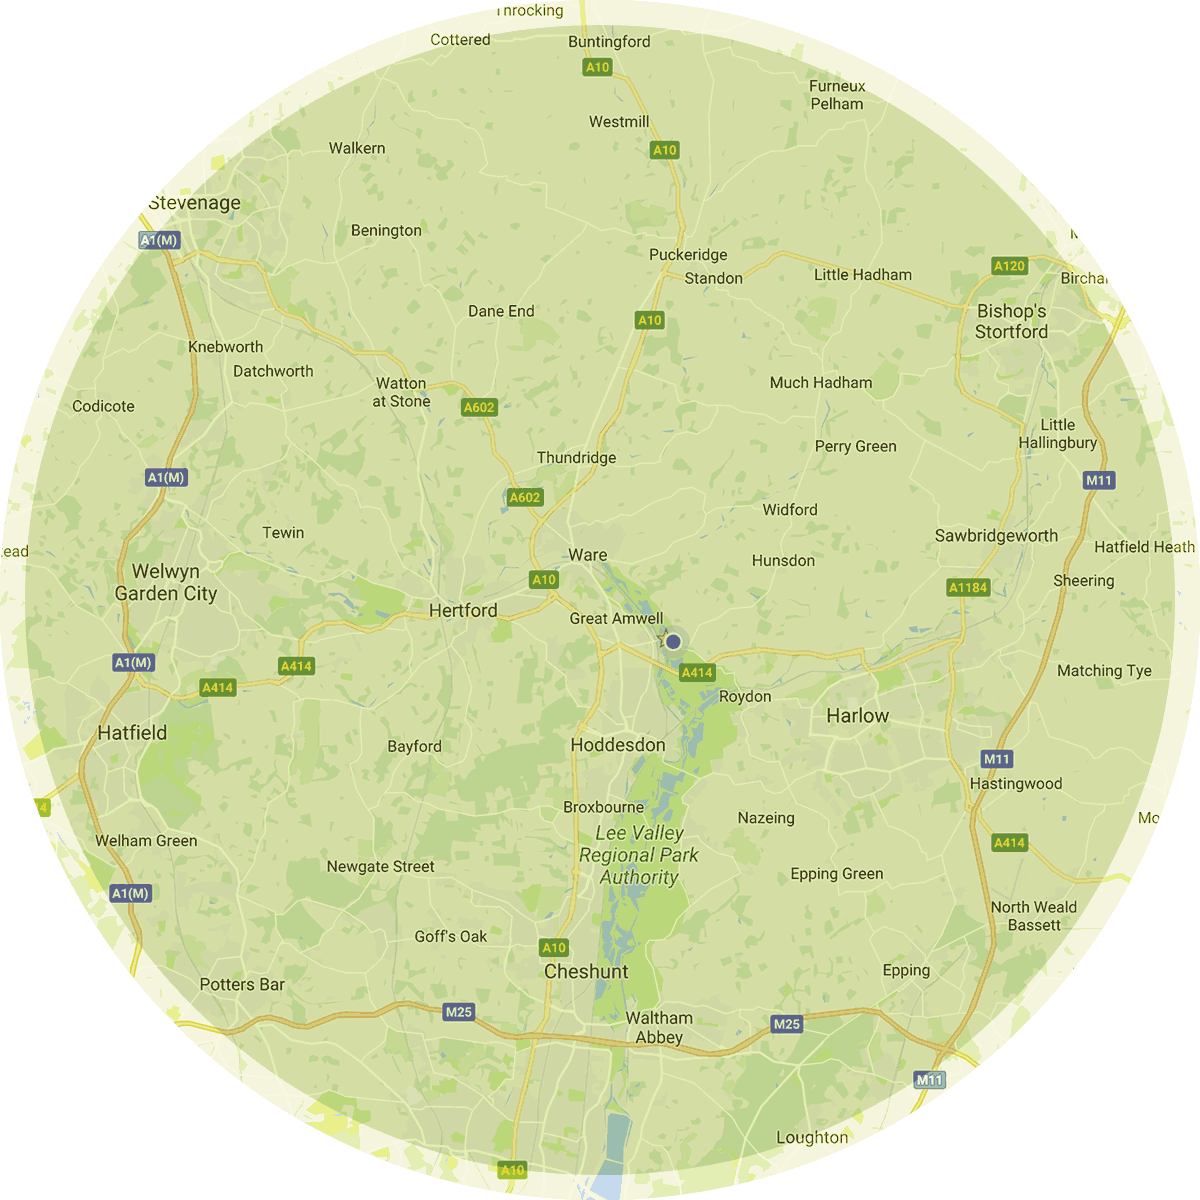 Areas covered - ware, Hertford, bishops Stortford, welling garden, epping, Harlow, stevenage, Hatfield, Sawbridgeworth, Hoddesdon, broxbourne, Nazing, Waltham Abbey, Cheshunt